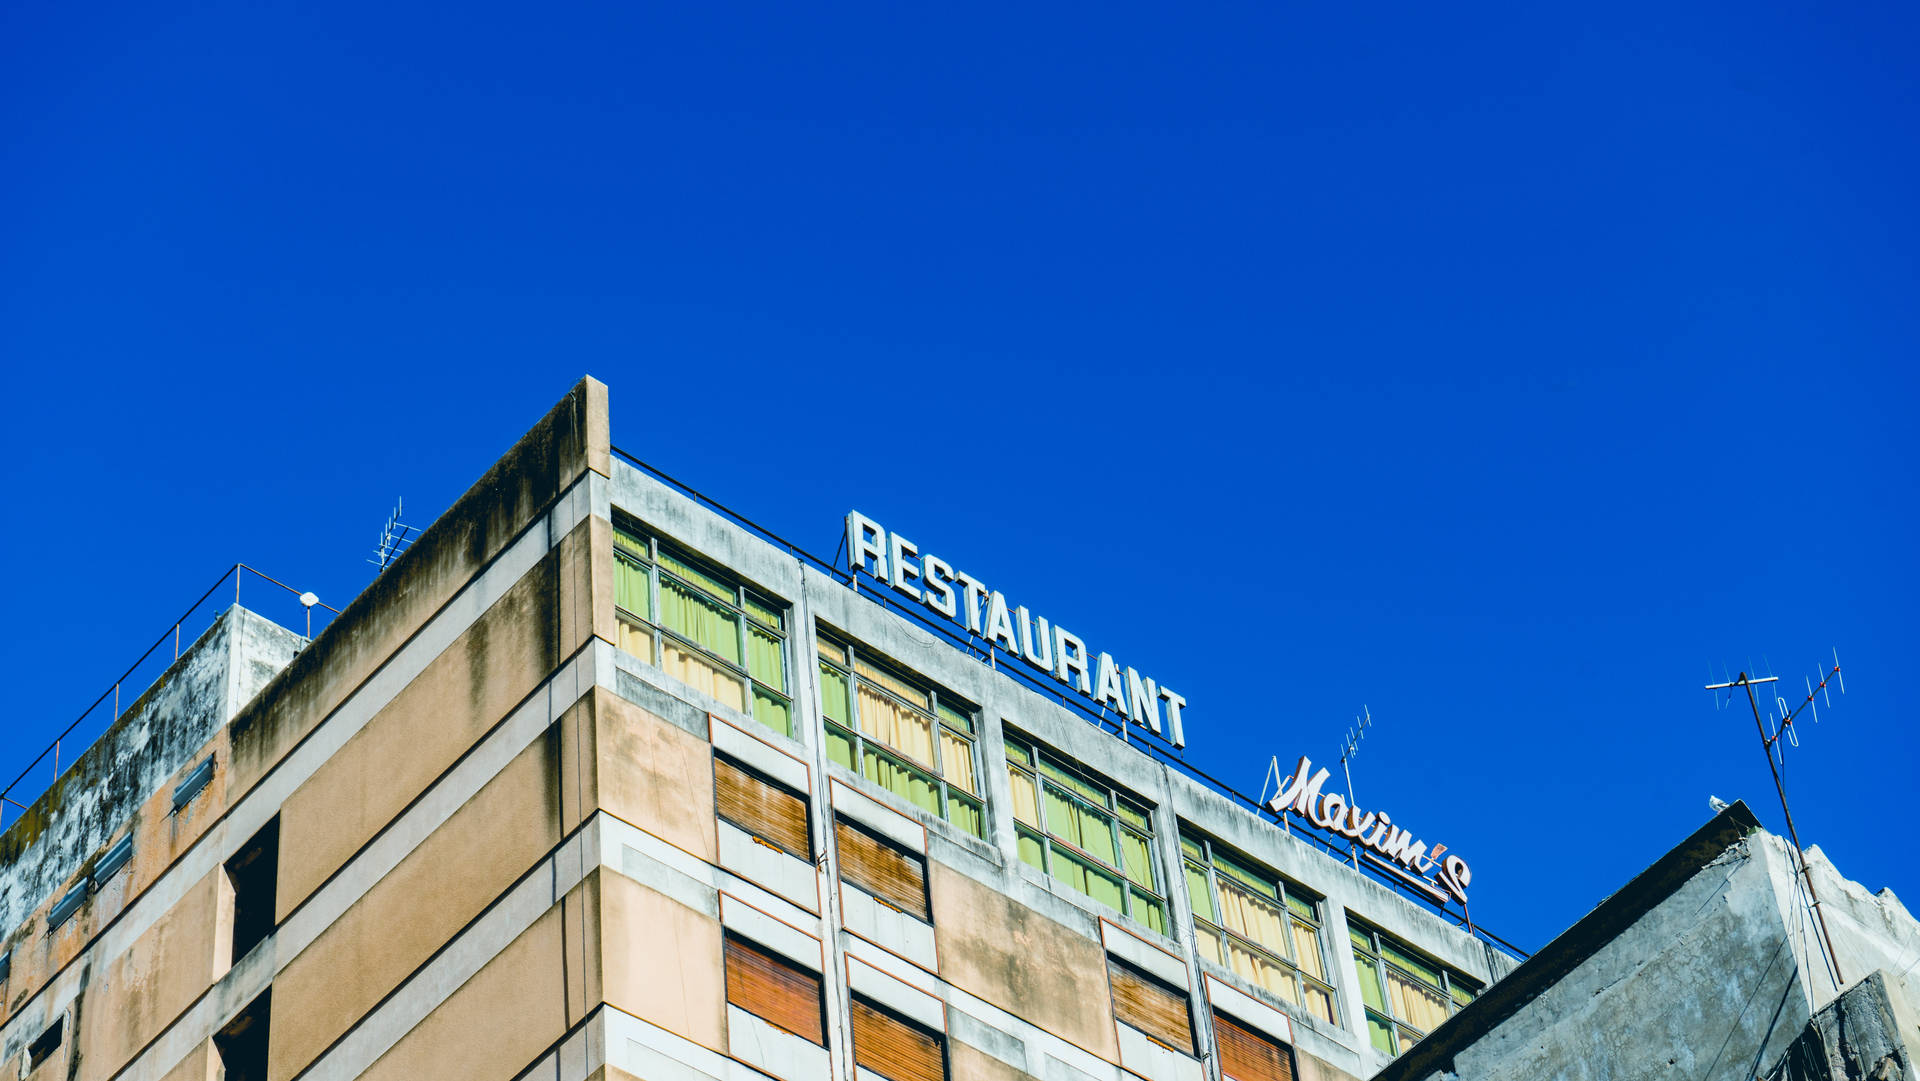 Building Restaurant Sign